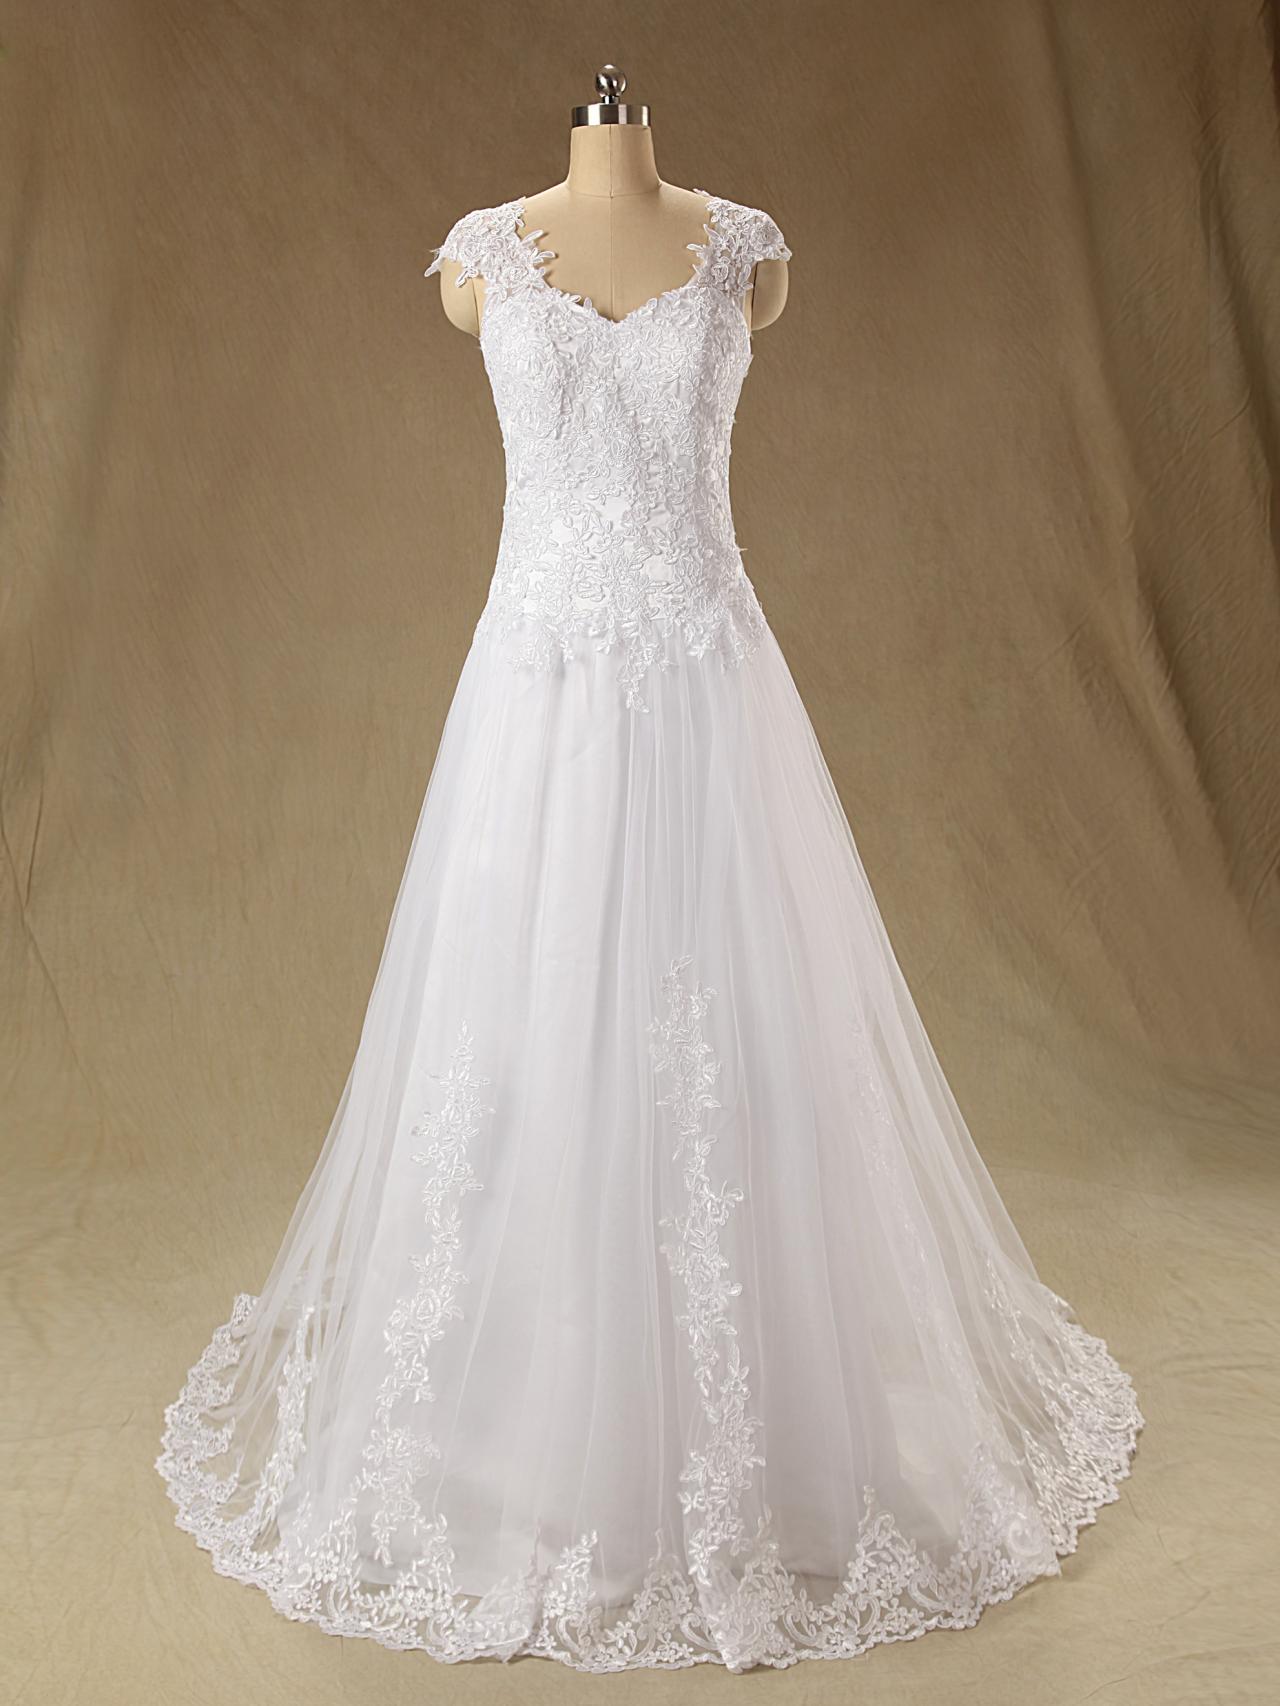 Xw151 Cap Sleeve A Line Long Lace Wedding Dress,long Lace Bridal Dress,long Lace Wedding Dress,a Line Lace Wedding Dress